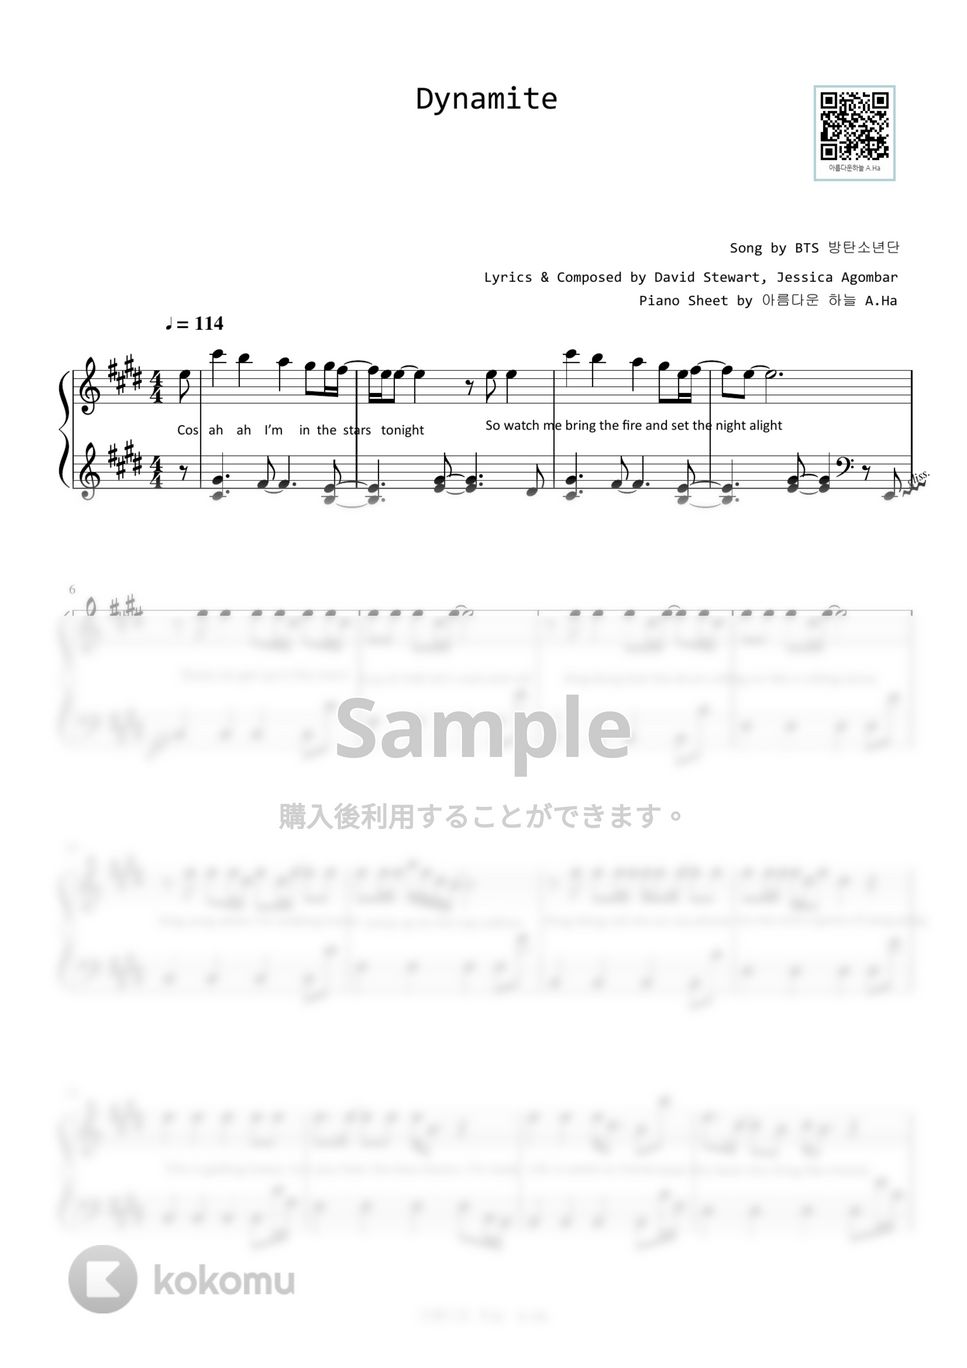 防弾少年団(BTS) - Dynamite (Level 4 -Original Key) by A.Ha